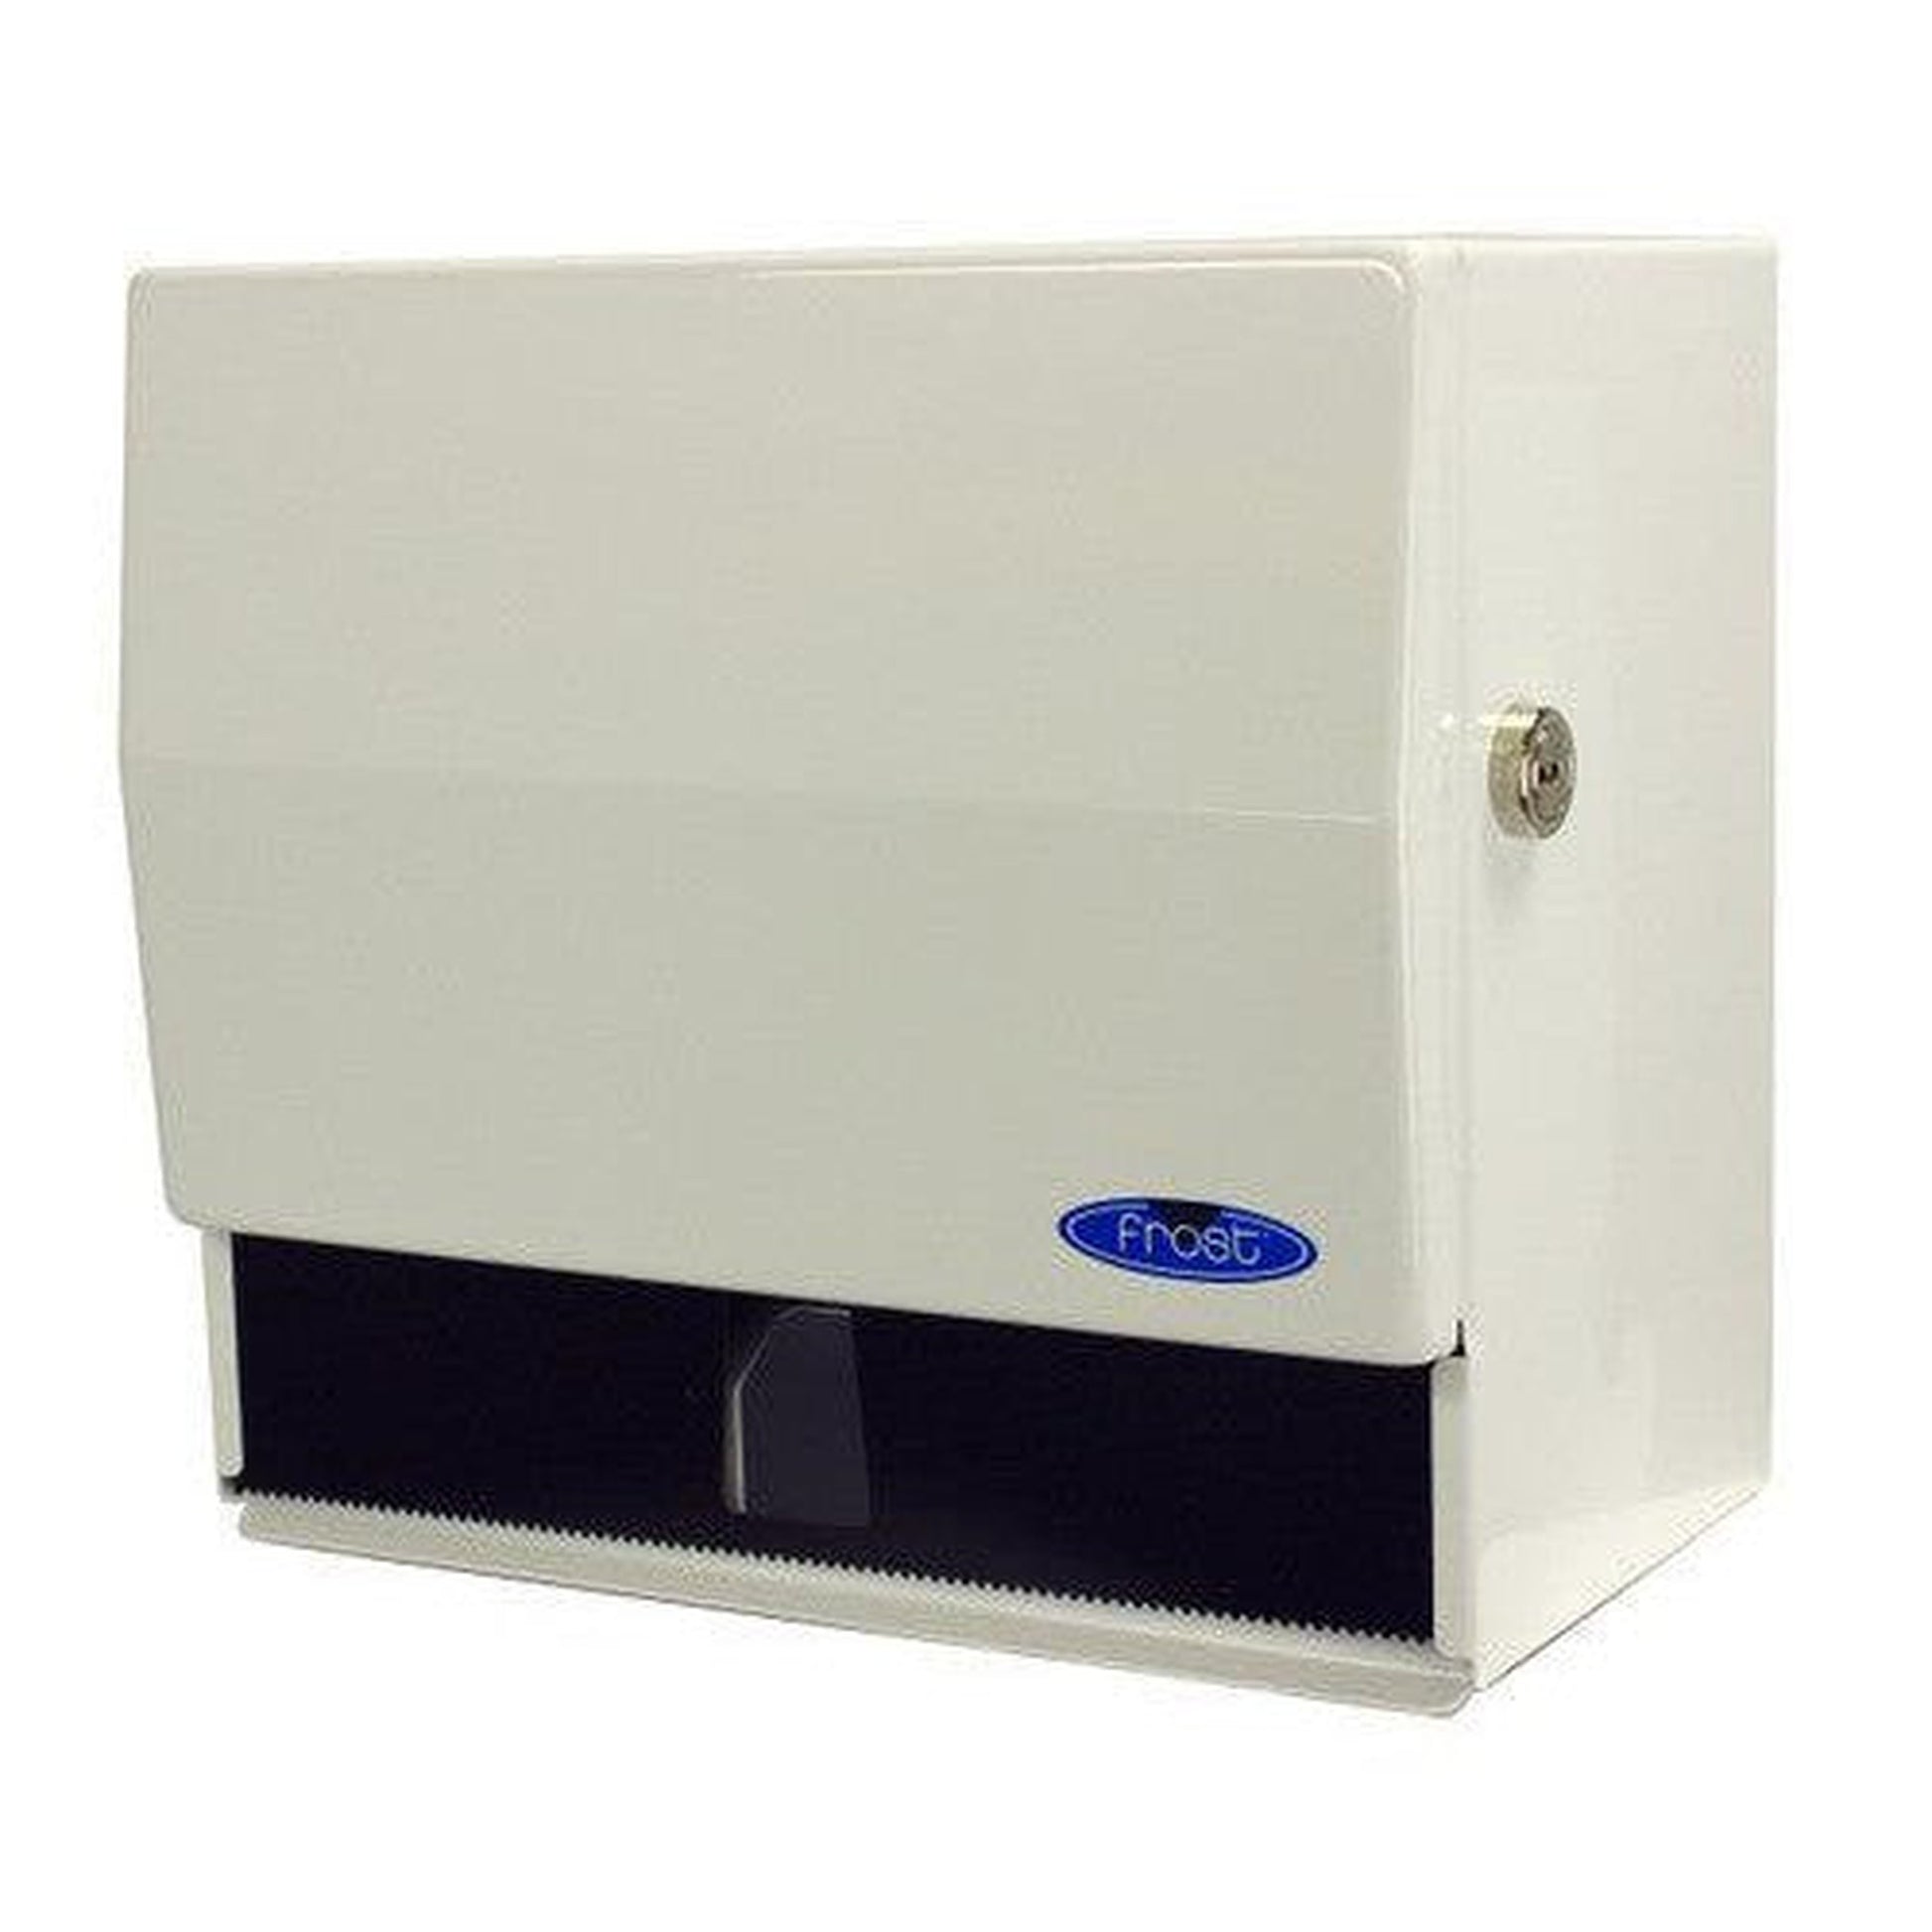 Frost 10.5 x 7.25 x 9.5 White Epoxy Powder Paper Product Dispenser